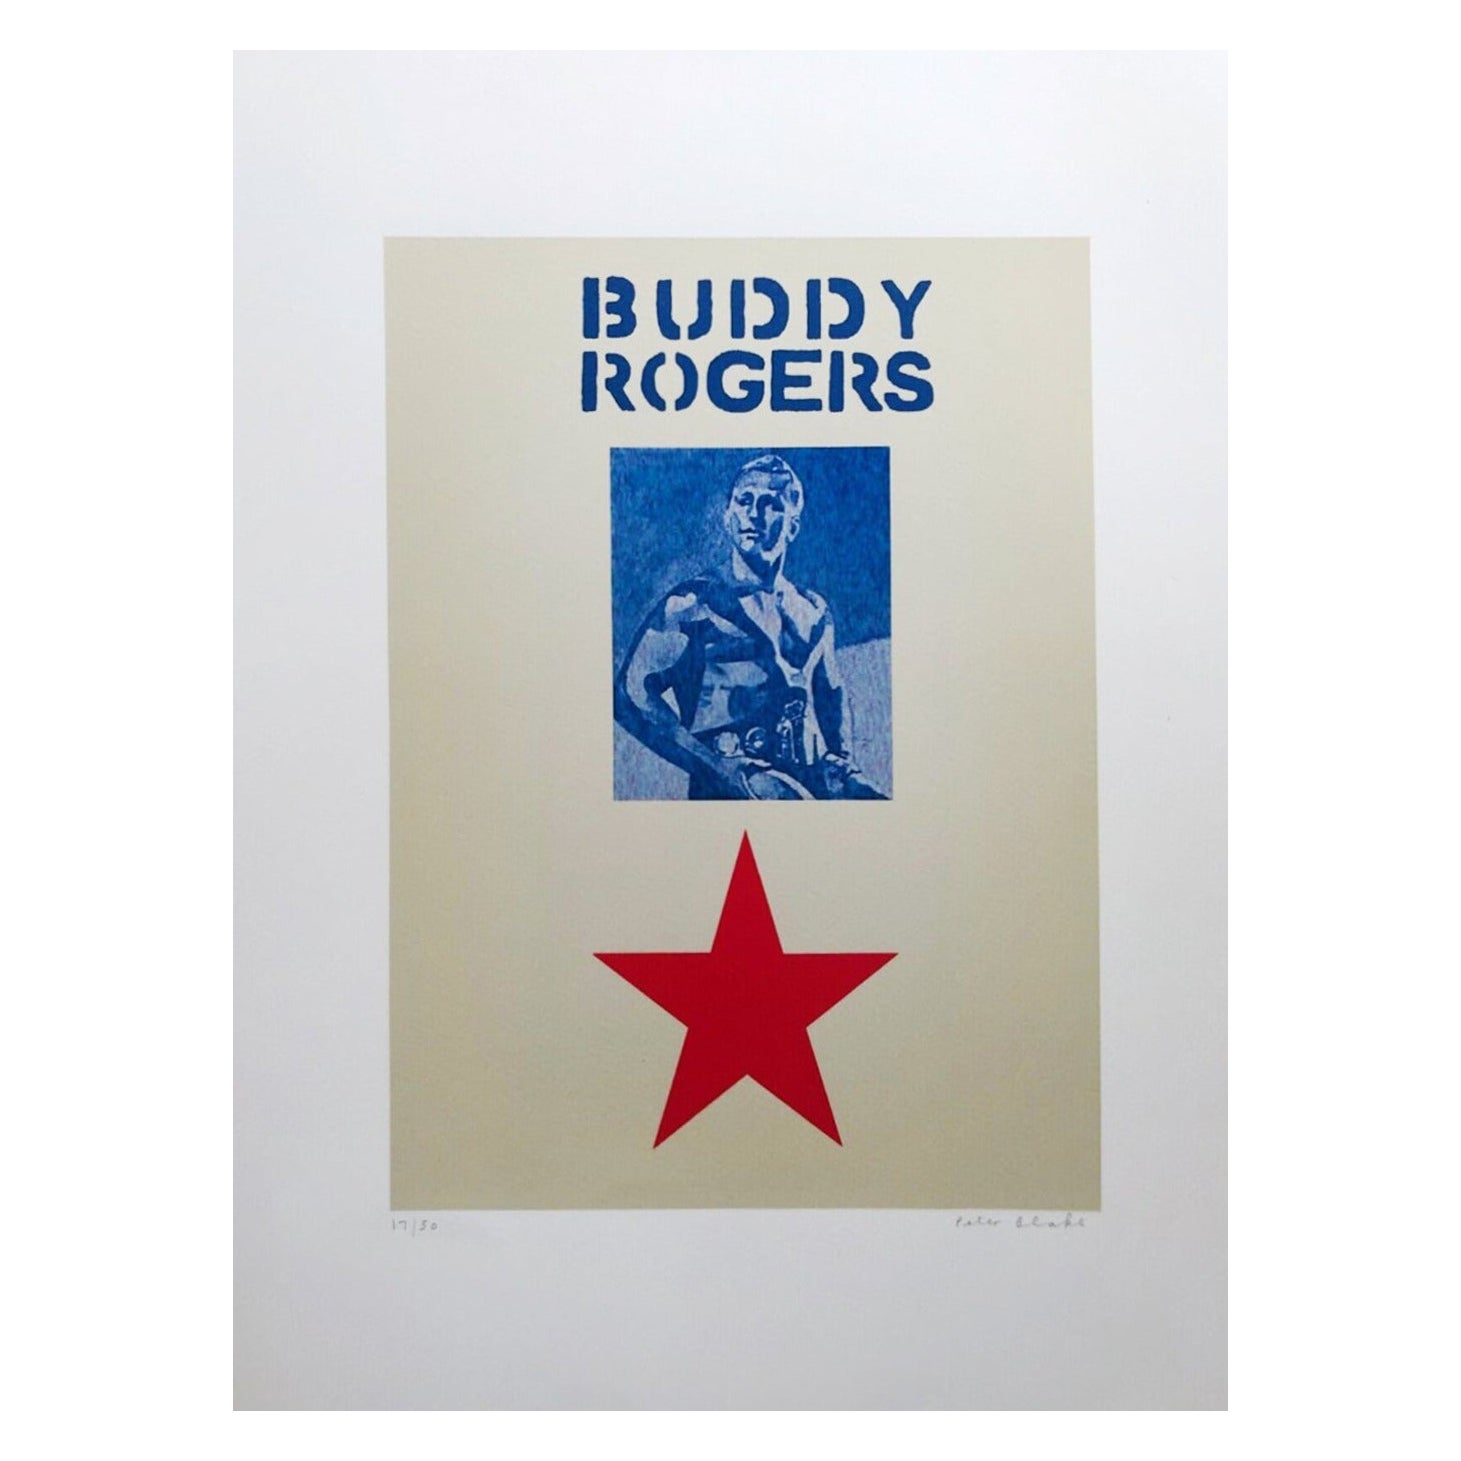 2003 Peter Blake - Buddy Rogers - Motif 10 Original Signed Art Print